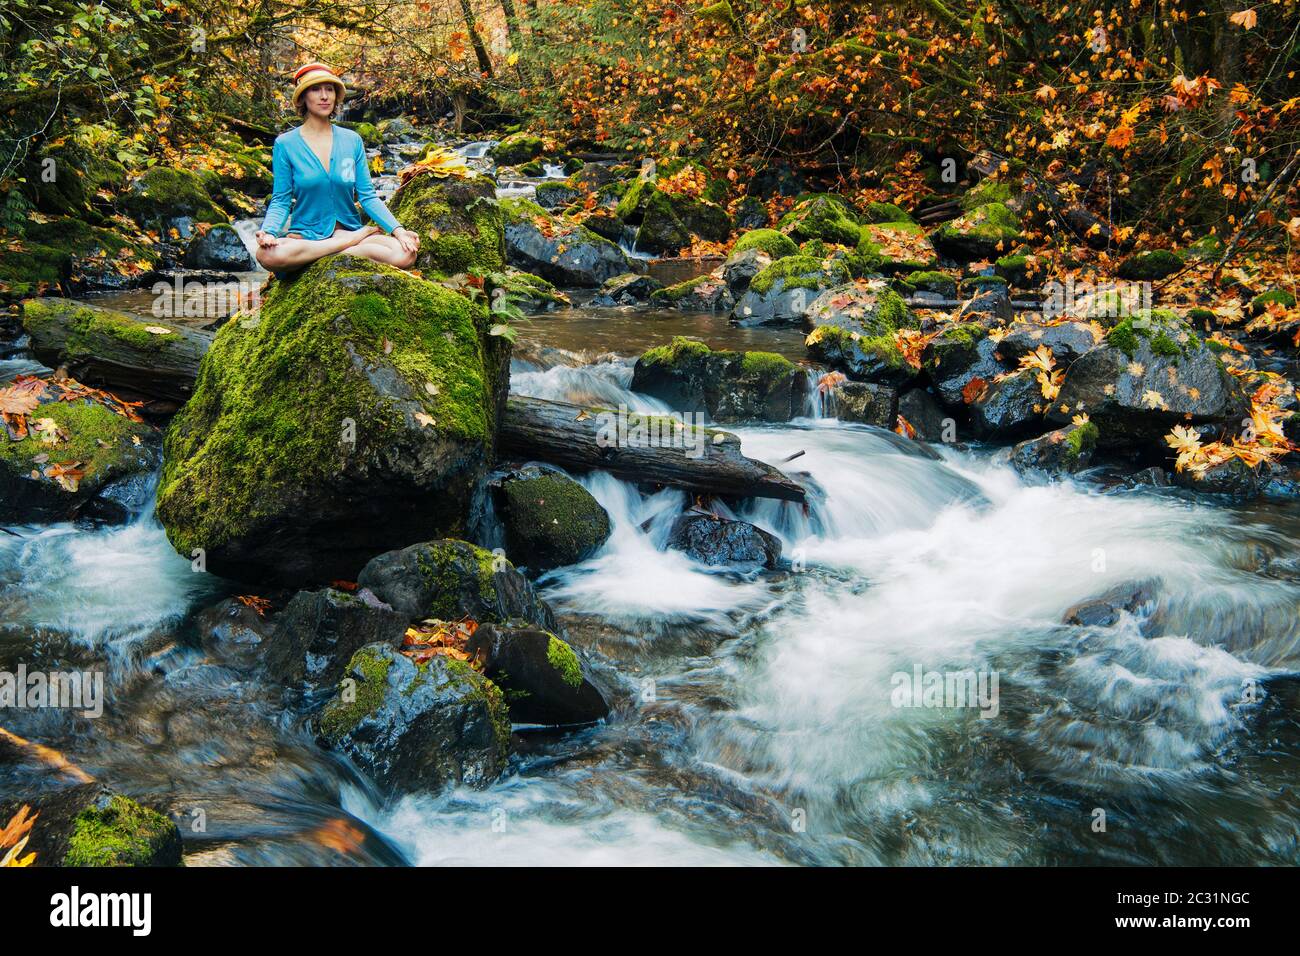 View of woman in yoga pose Rocky Brook Falls, Brinnon, Washington, USA Stock Photo